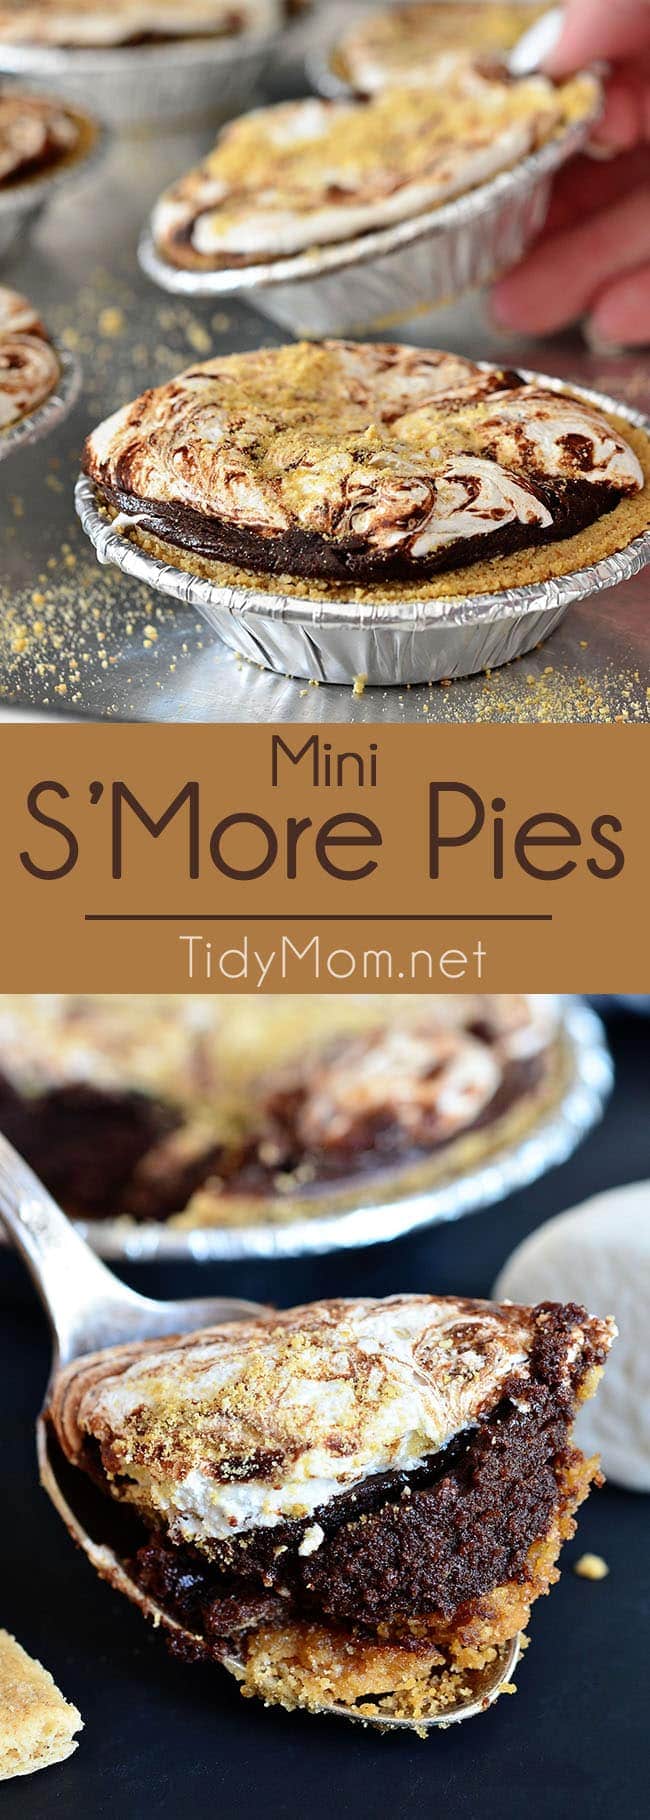 Mini S’more Pies photo collage